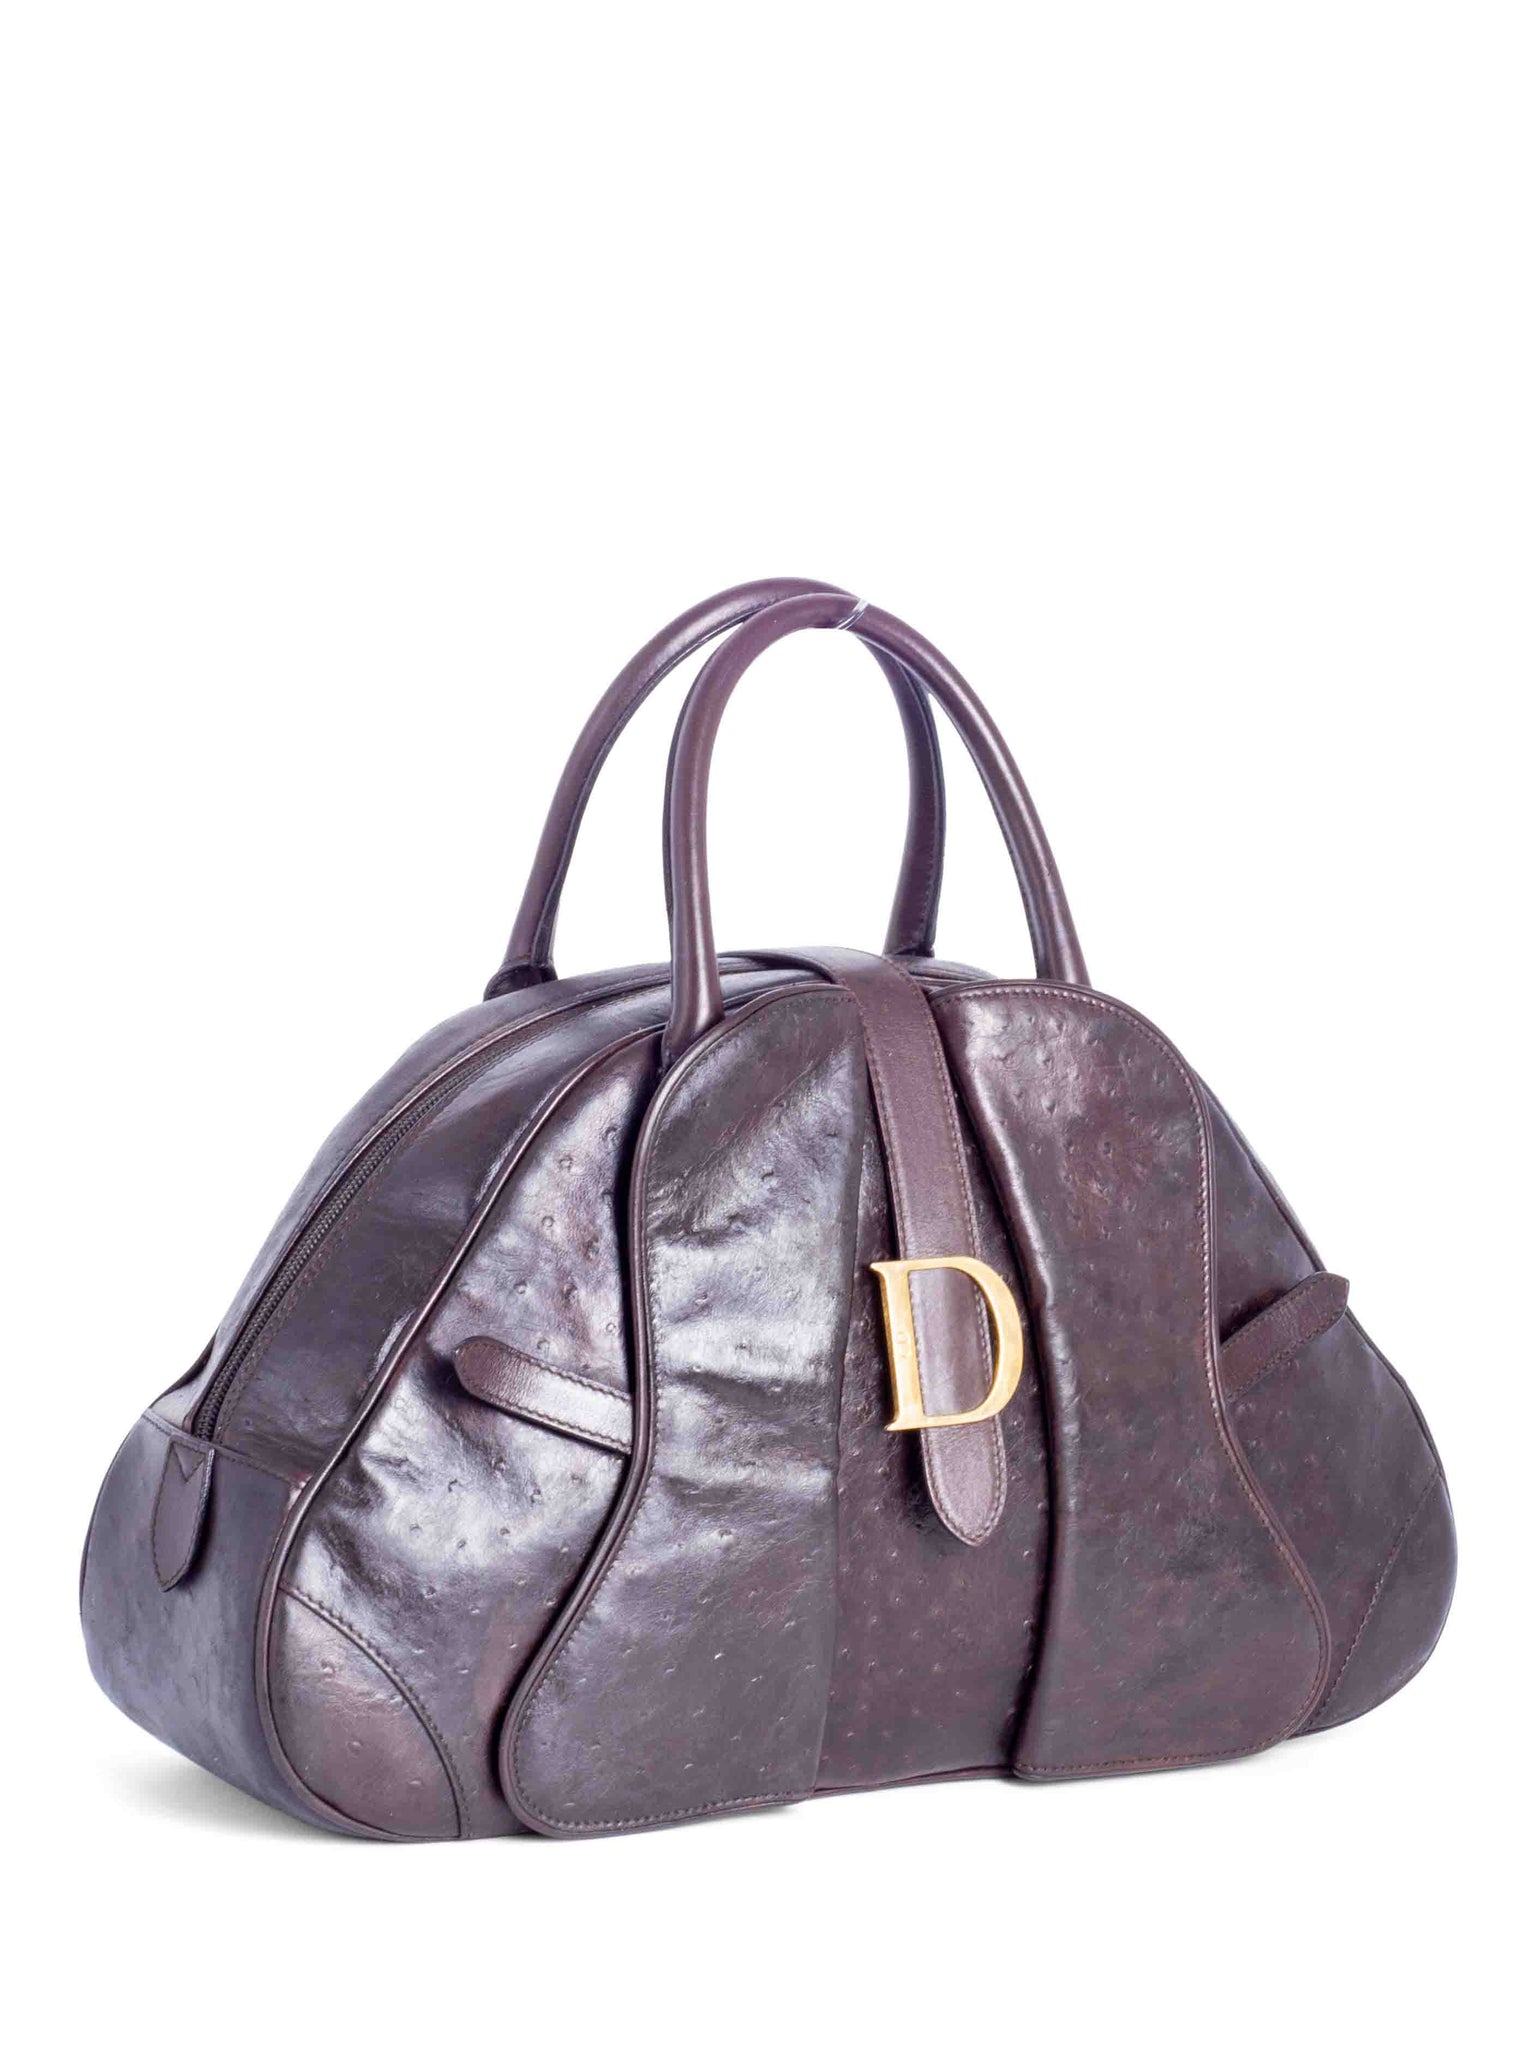 Authentic vs. Fake: Christian Dior Lady Dior Handbag Comparison 🕵️ 